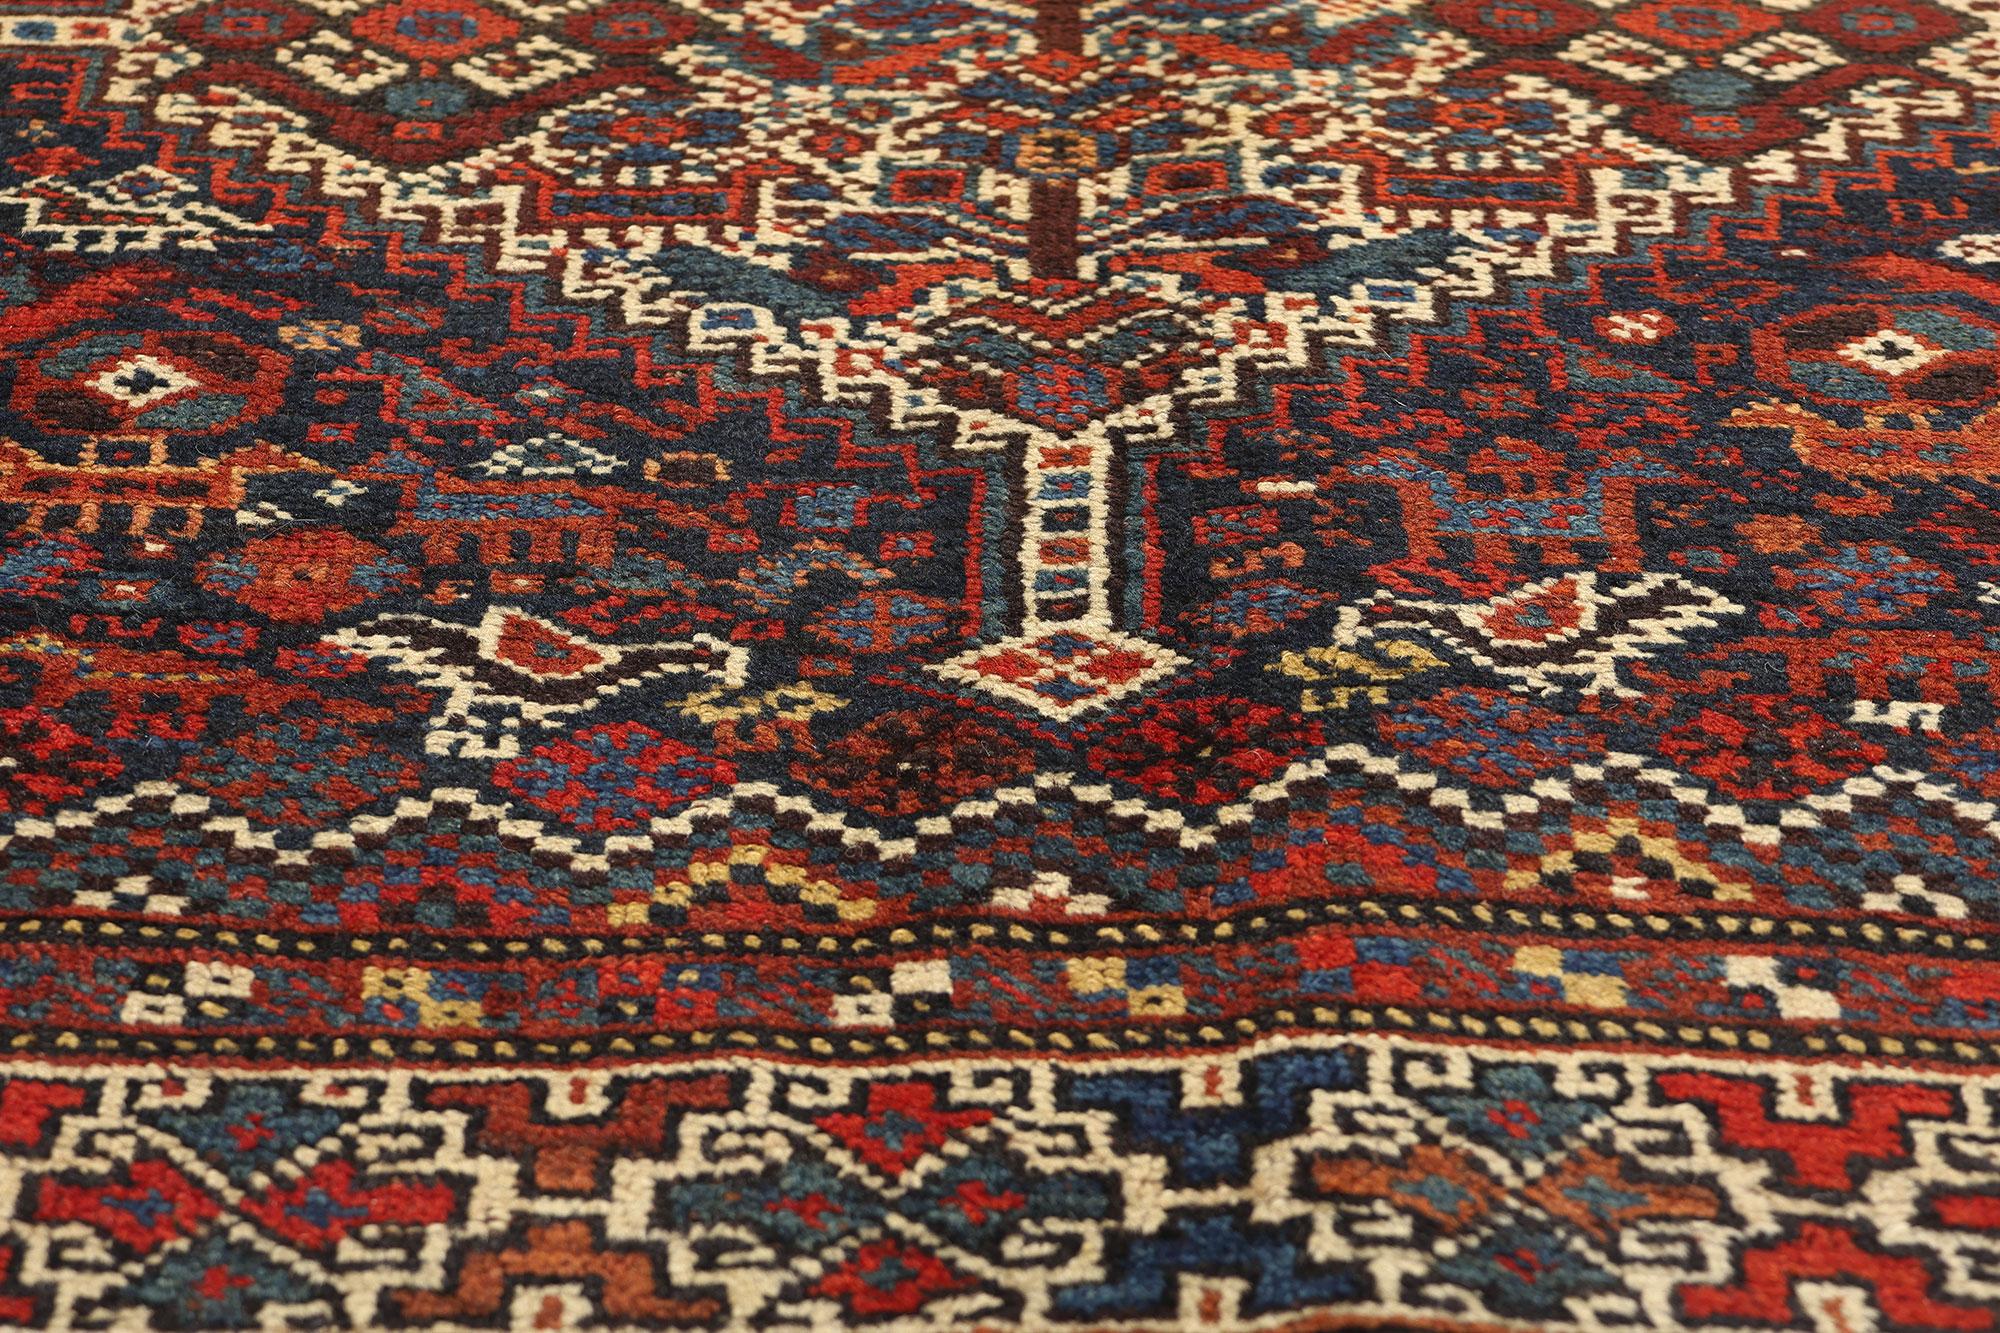 Late 19th Century Antique Persian Shiraz Rug In Distressed Condition For Sale In Dallas, TX